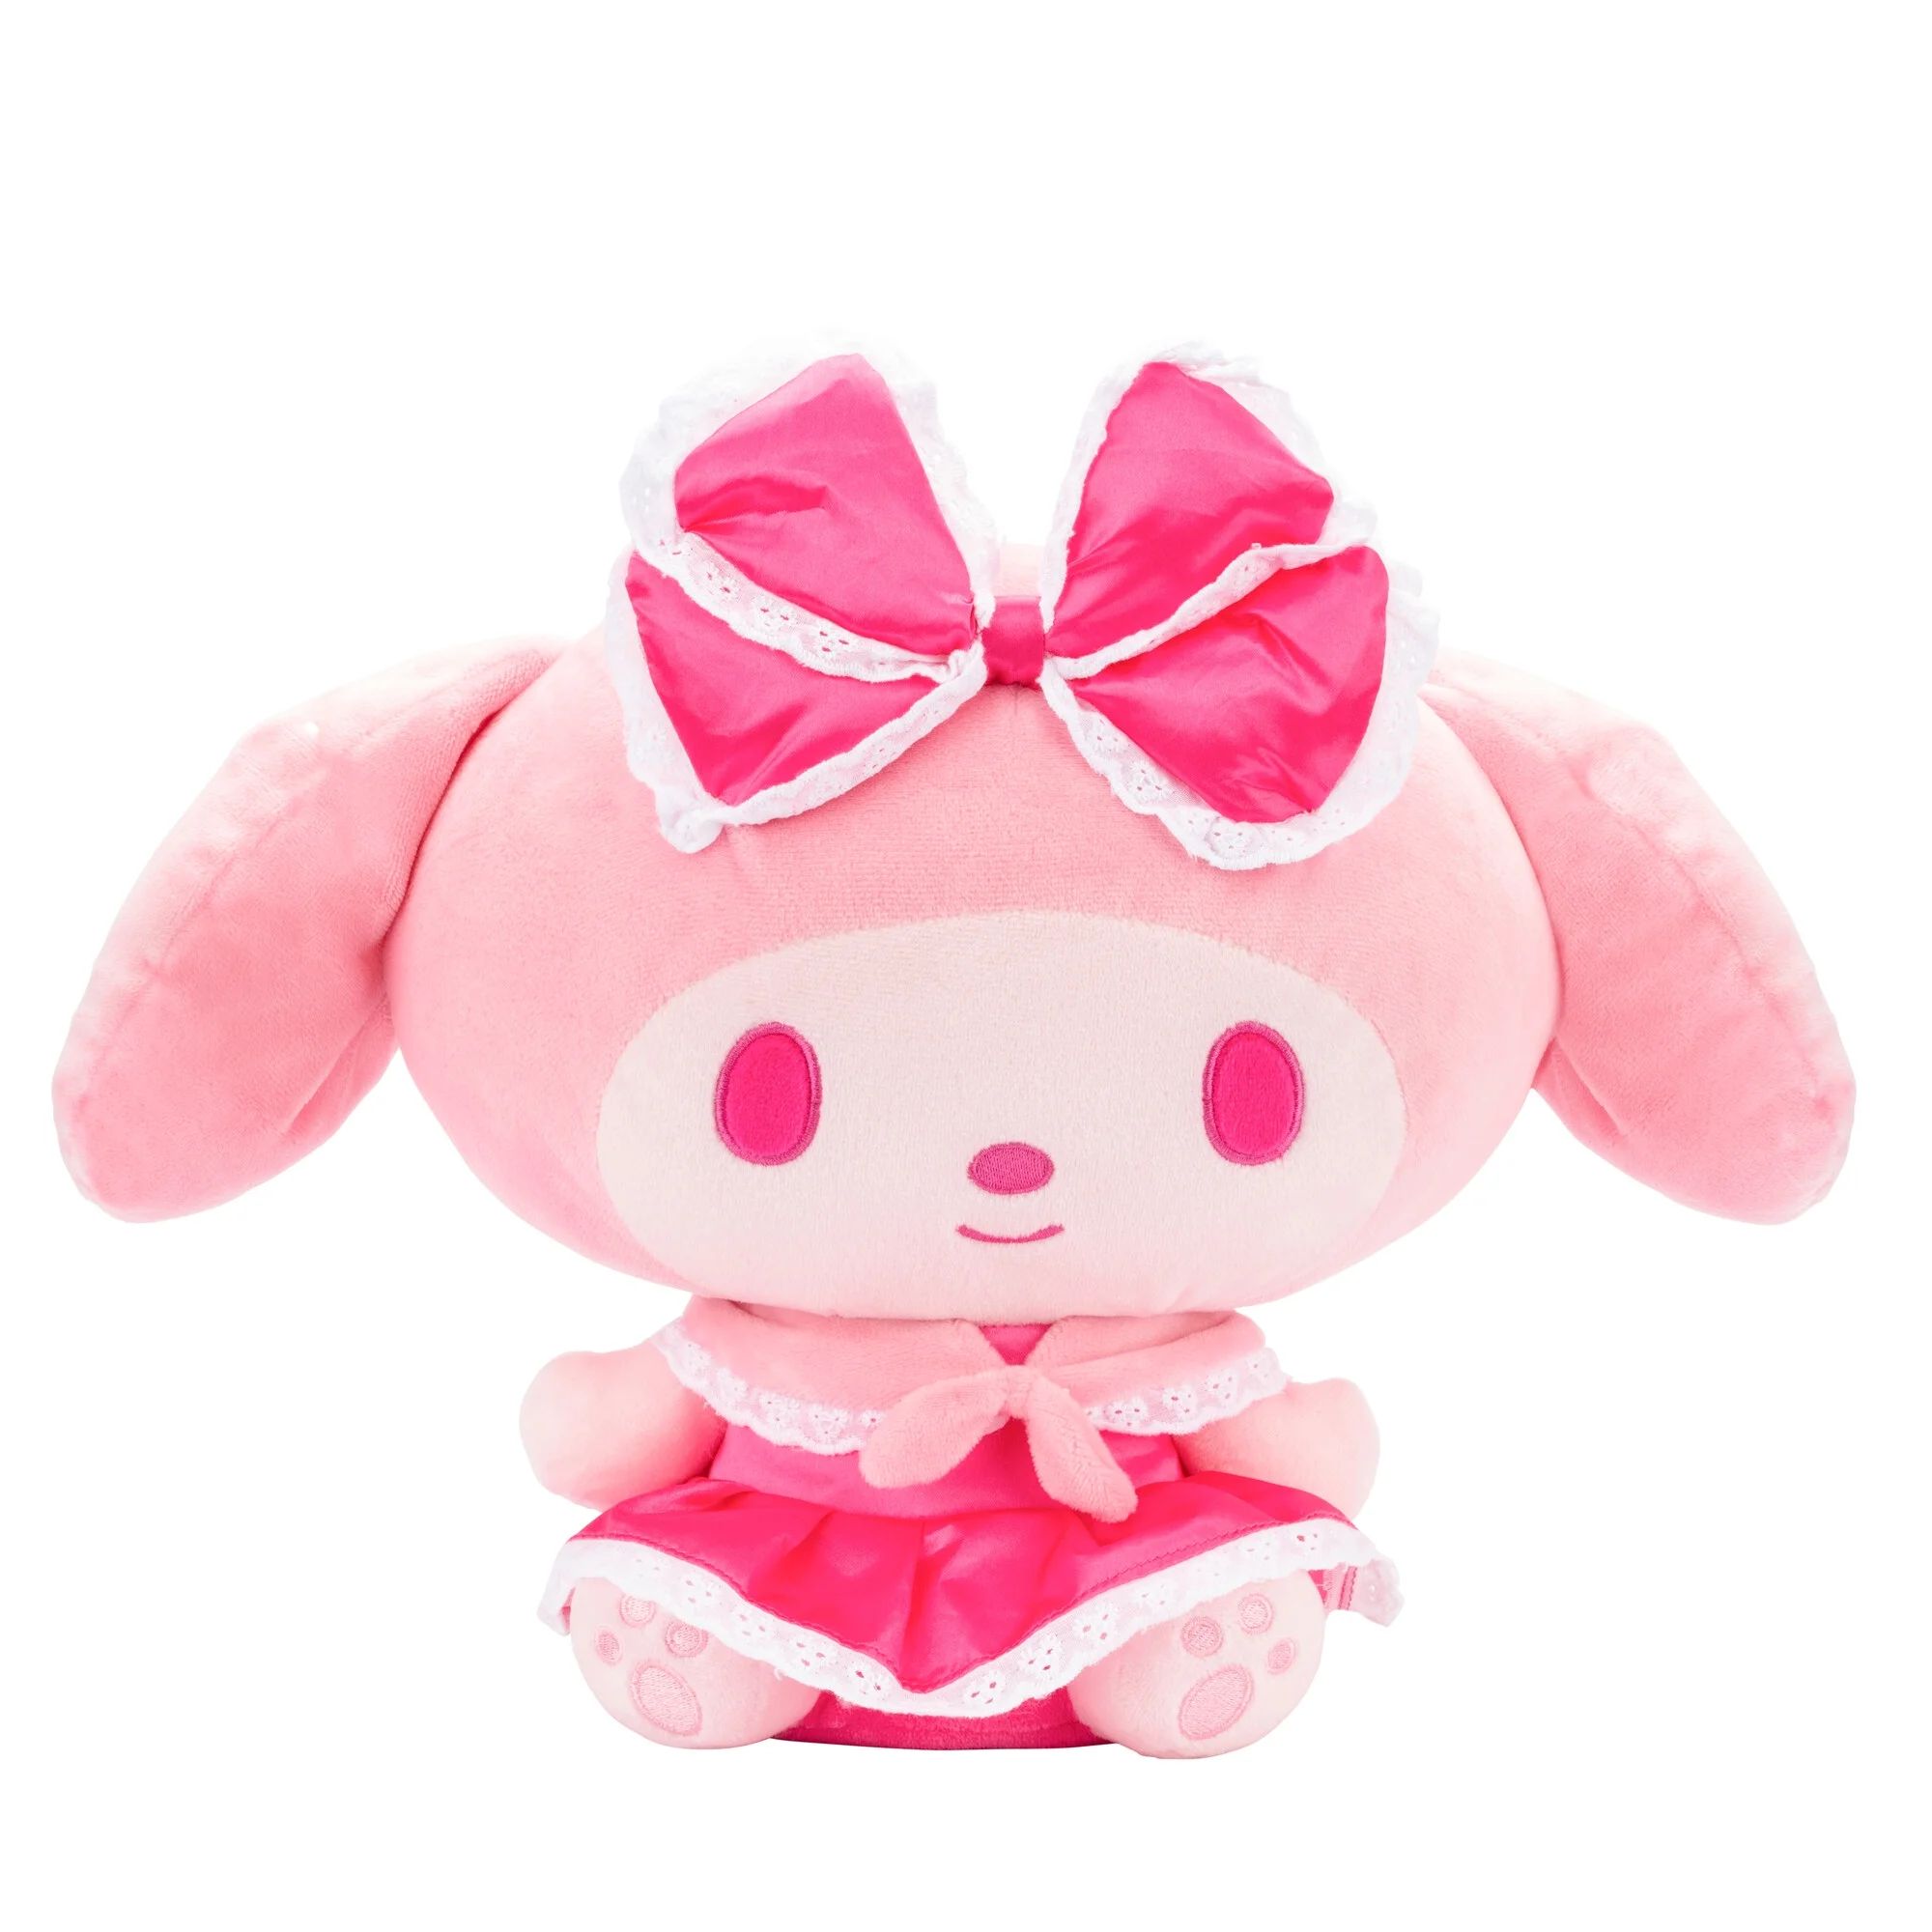 My Melody 12 inch Pink Monochrome Plush - Hello Kitty and Friends | Walmart (US)